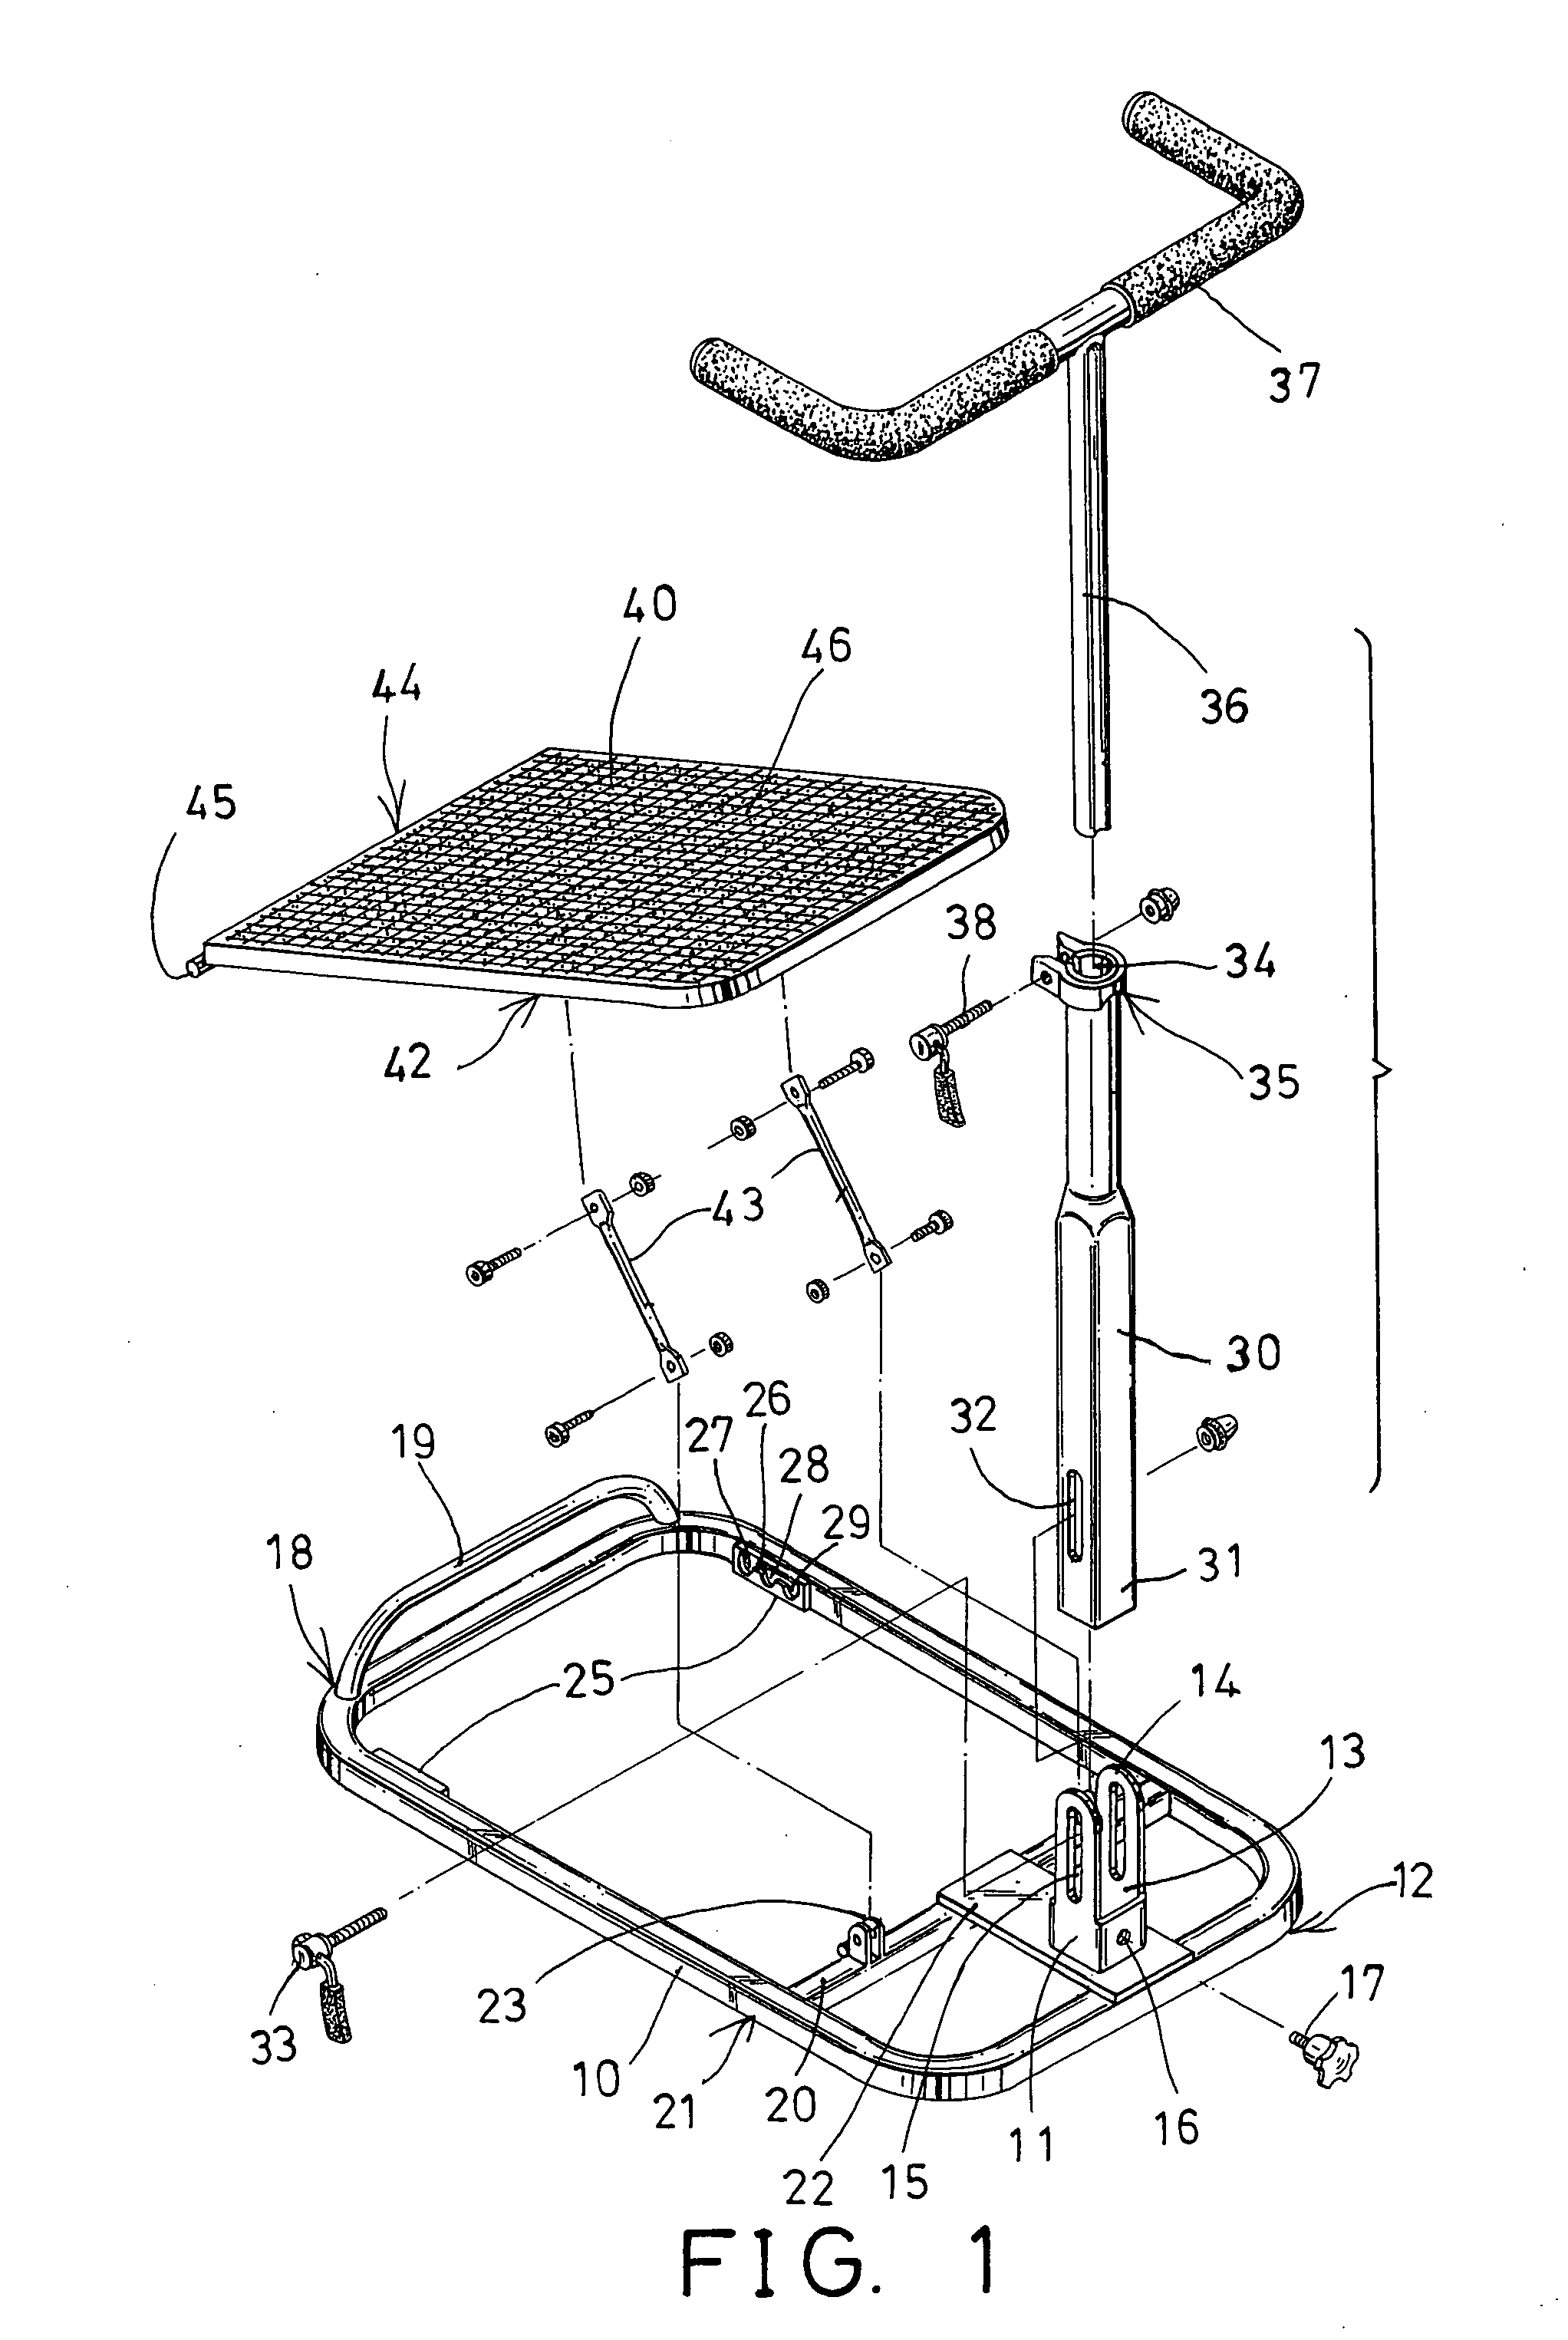 Foot exercise device having tiltable platform